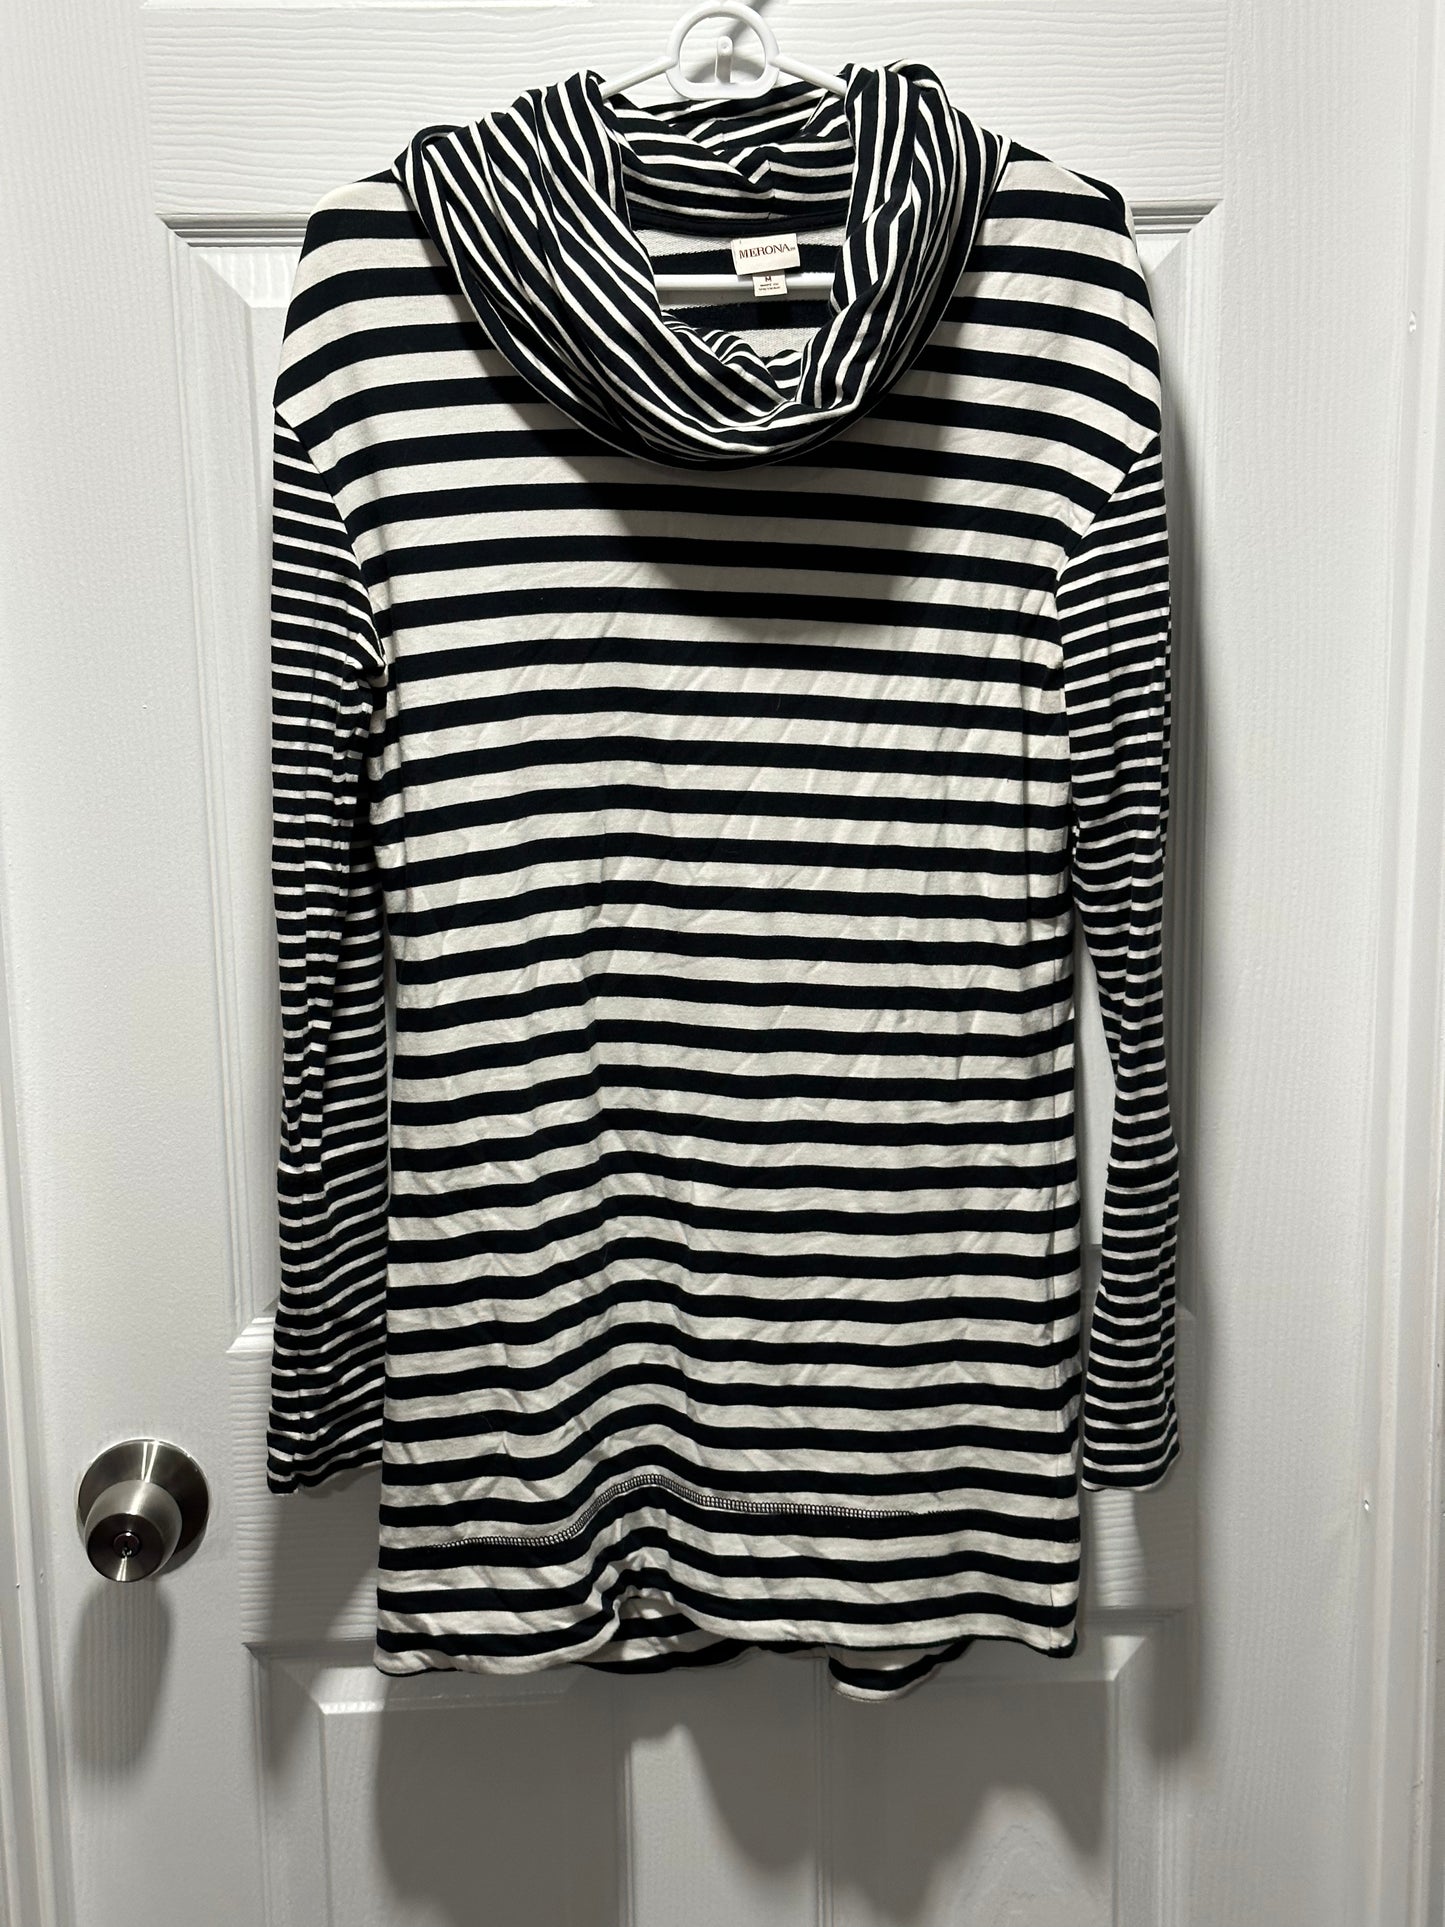 Merona Black & White Striped Tunic - Women’s M - EUC